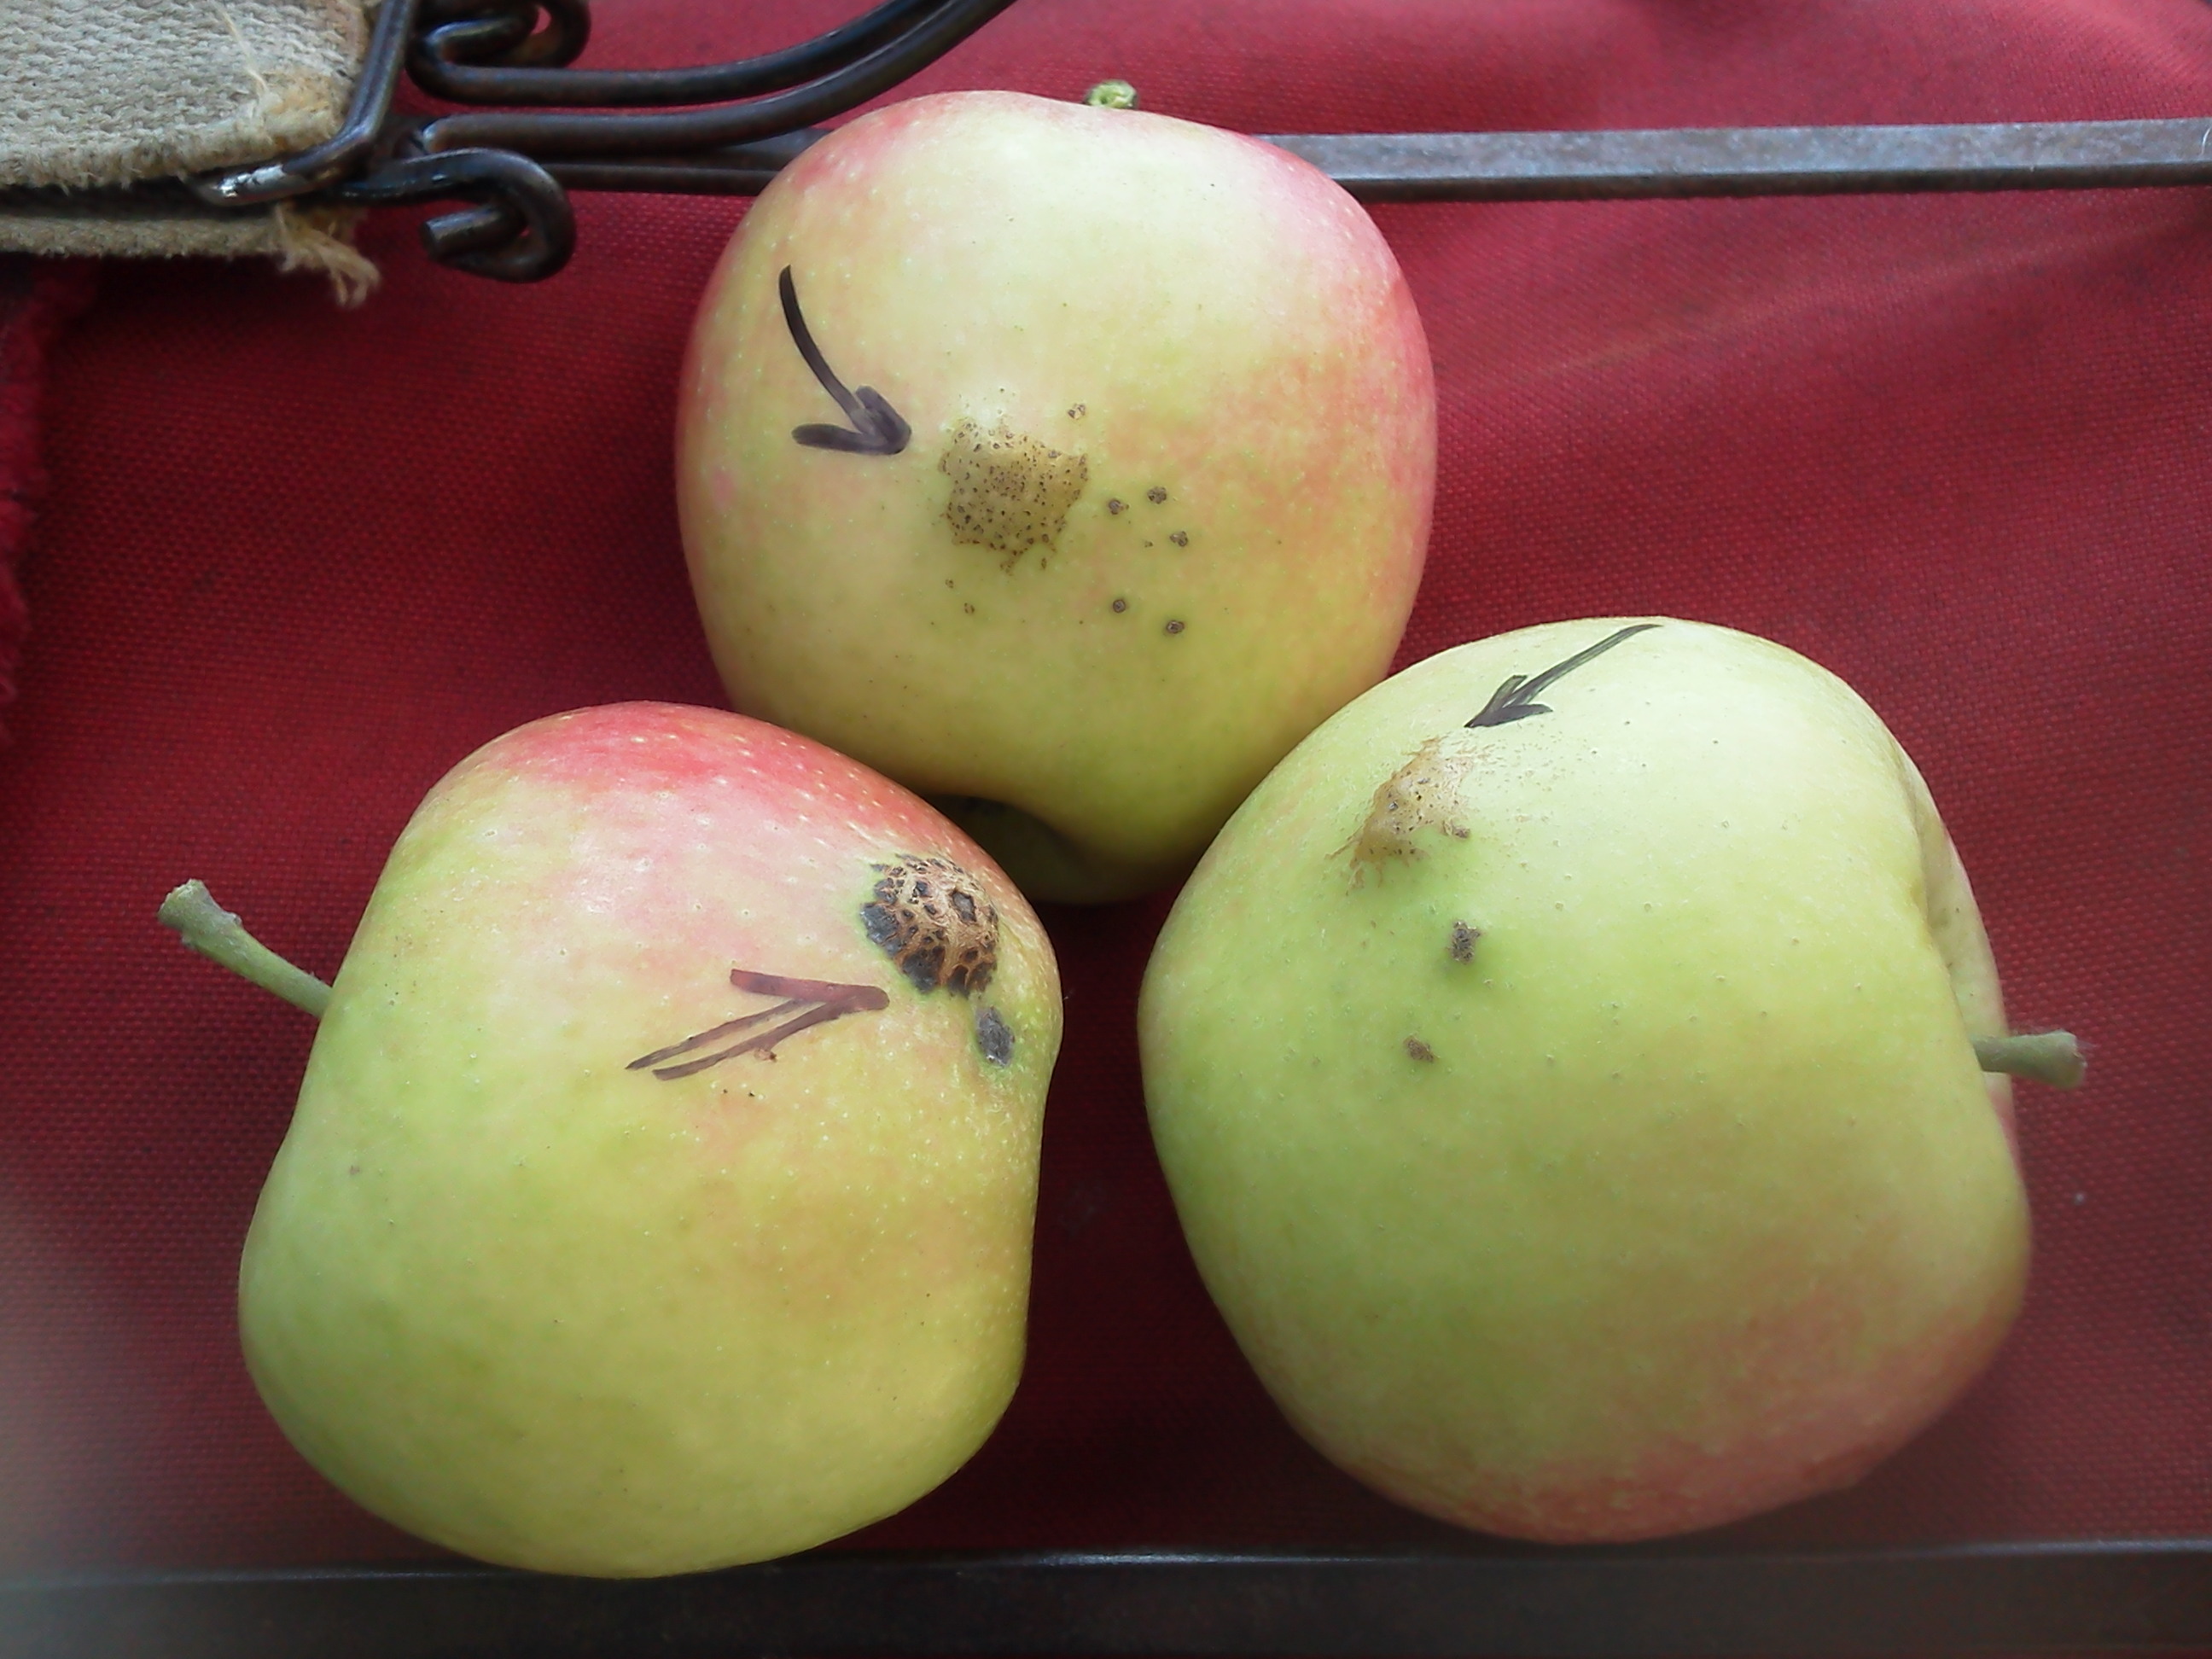 Raised blotches on apples.